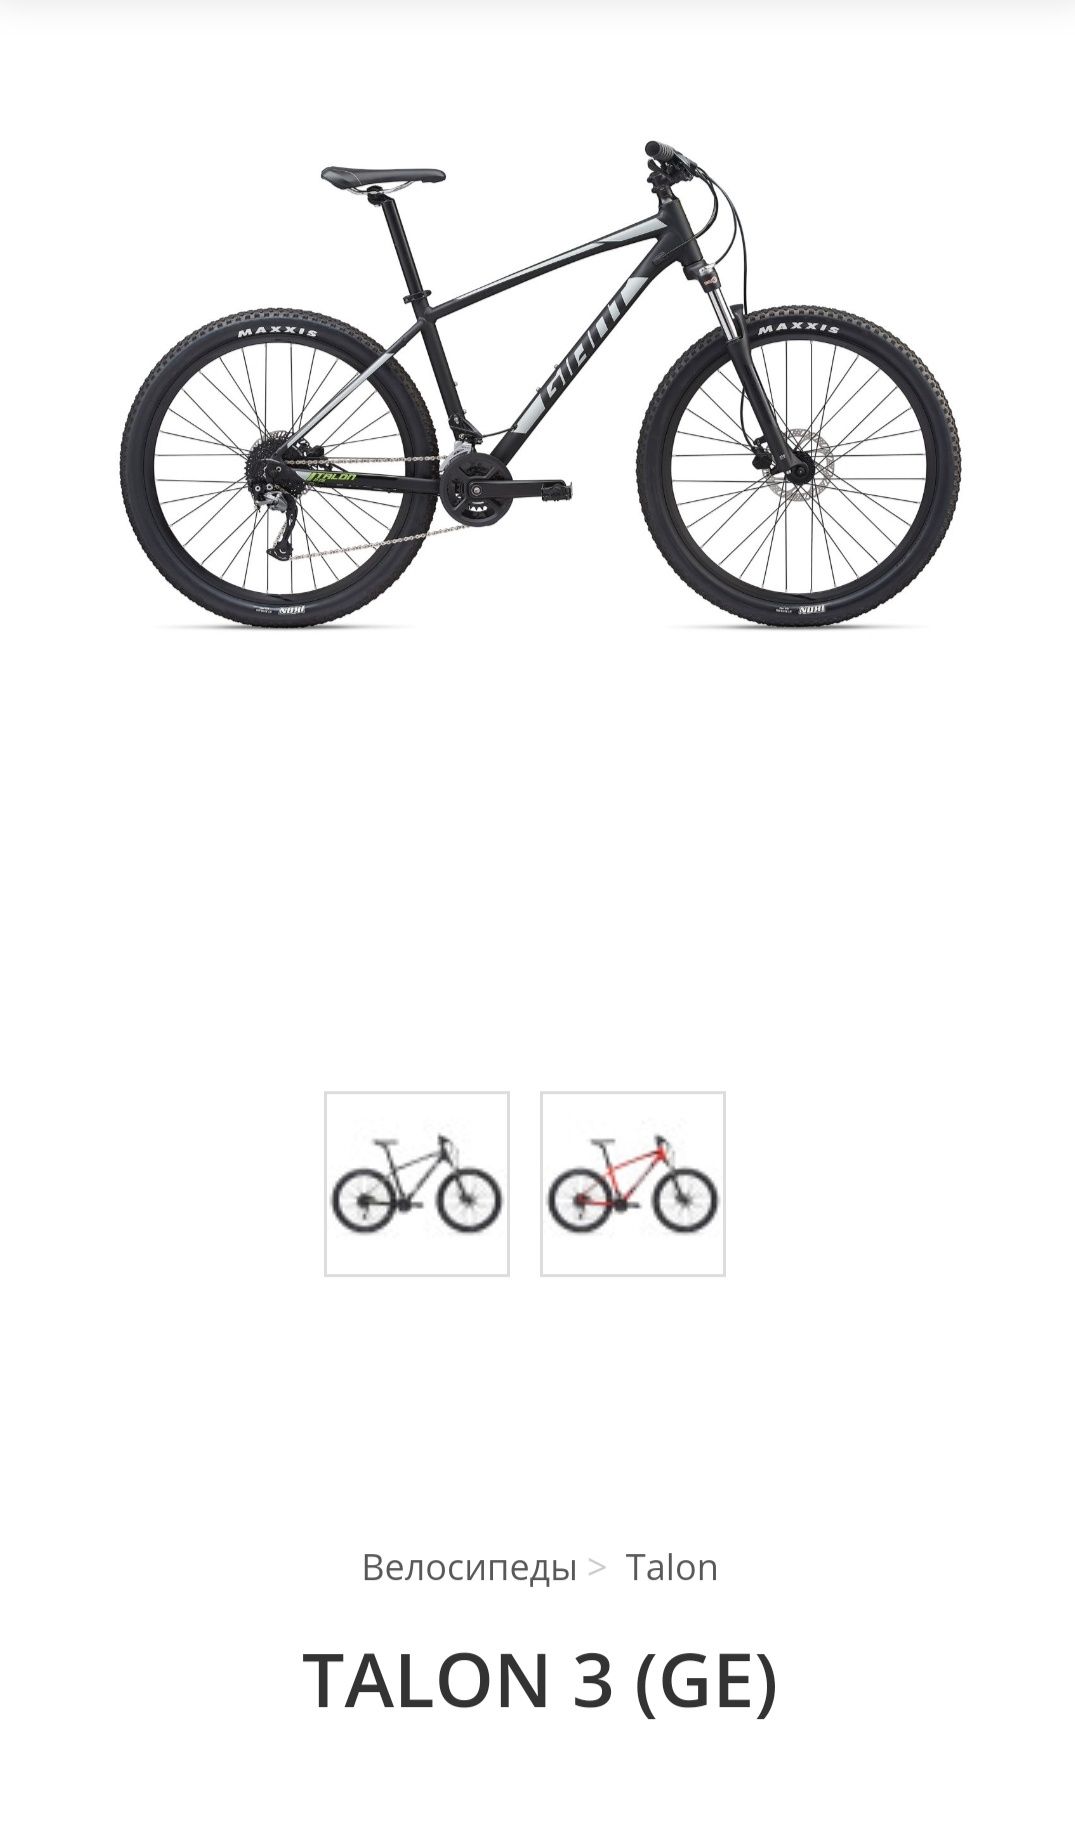 Продам велосипед Giant Talon 3, 29, 2020